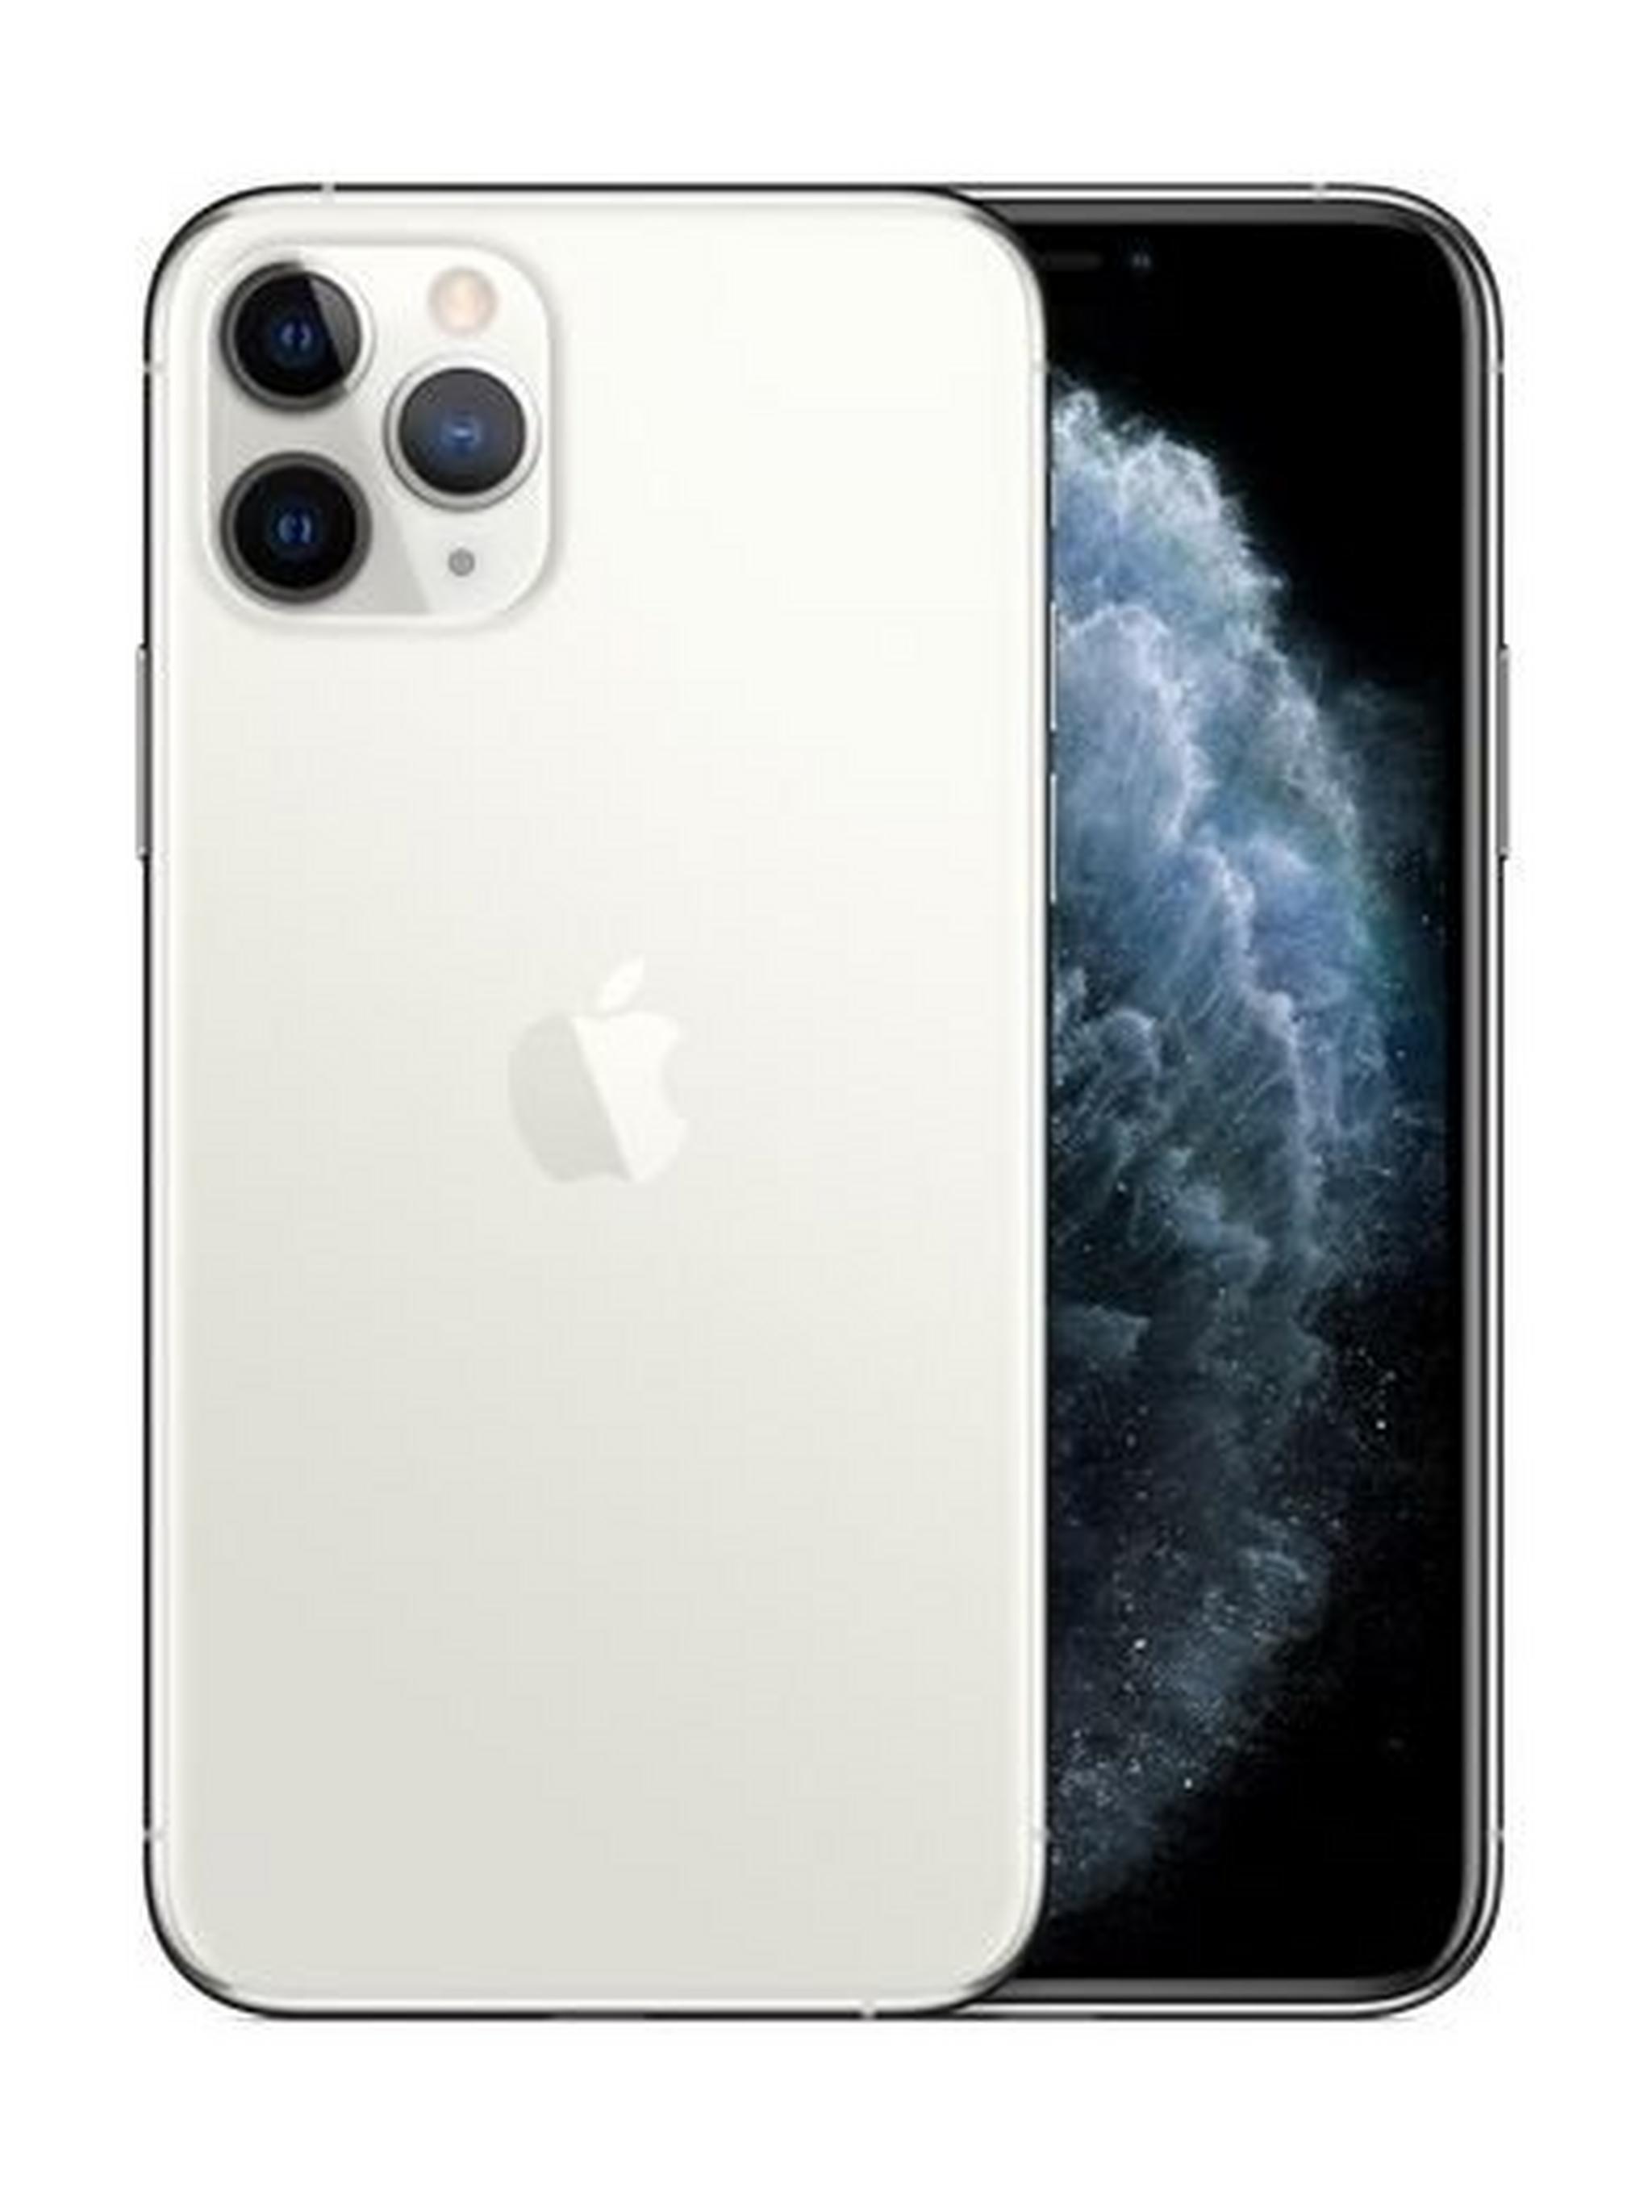 Apple iPhone 11 Pro 64GB Phone - Silver